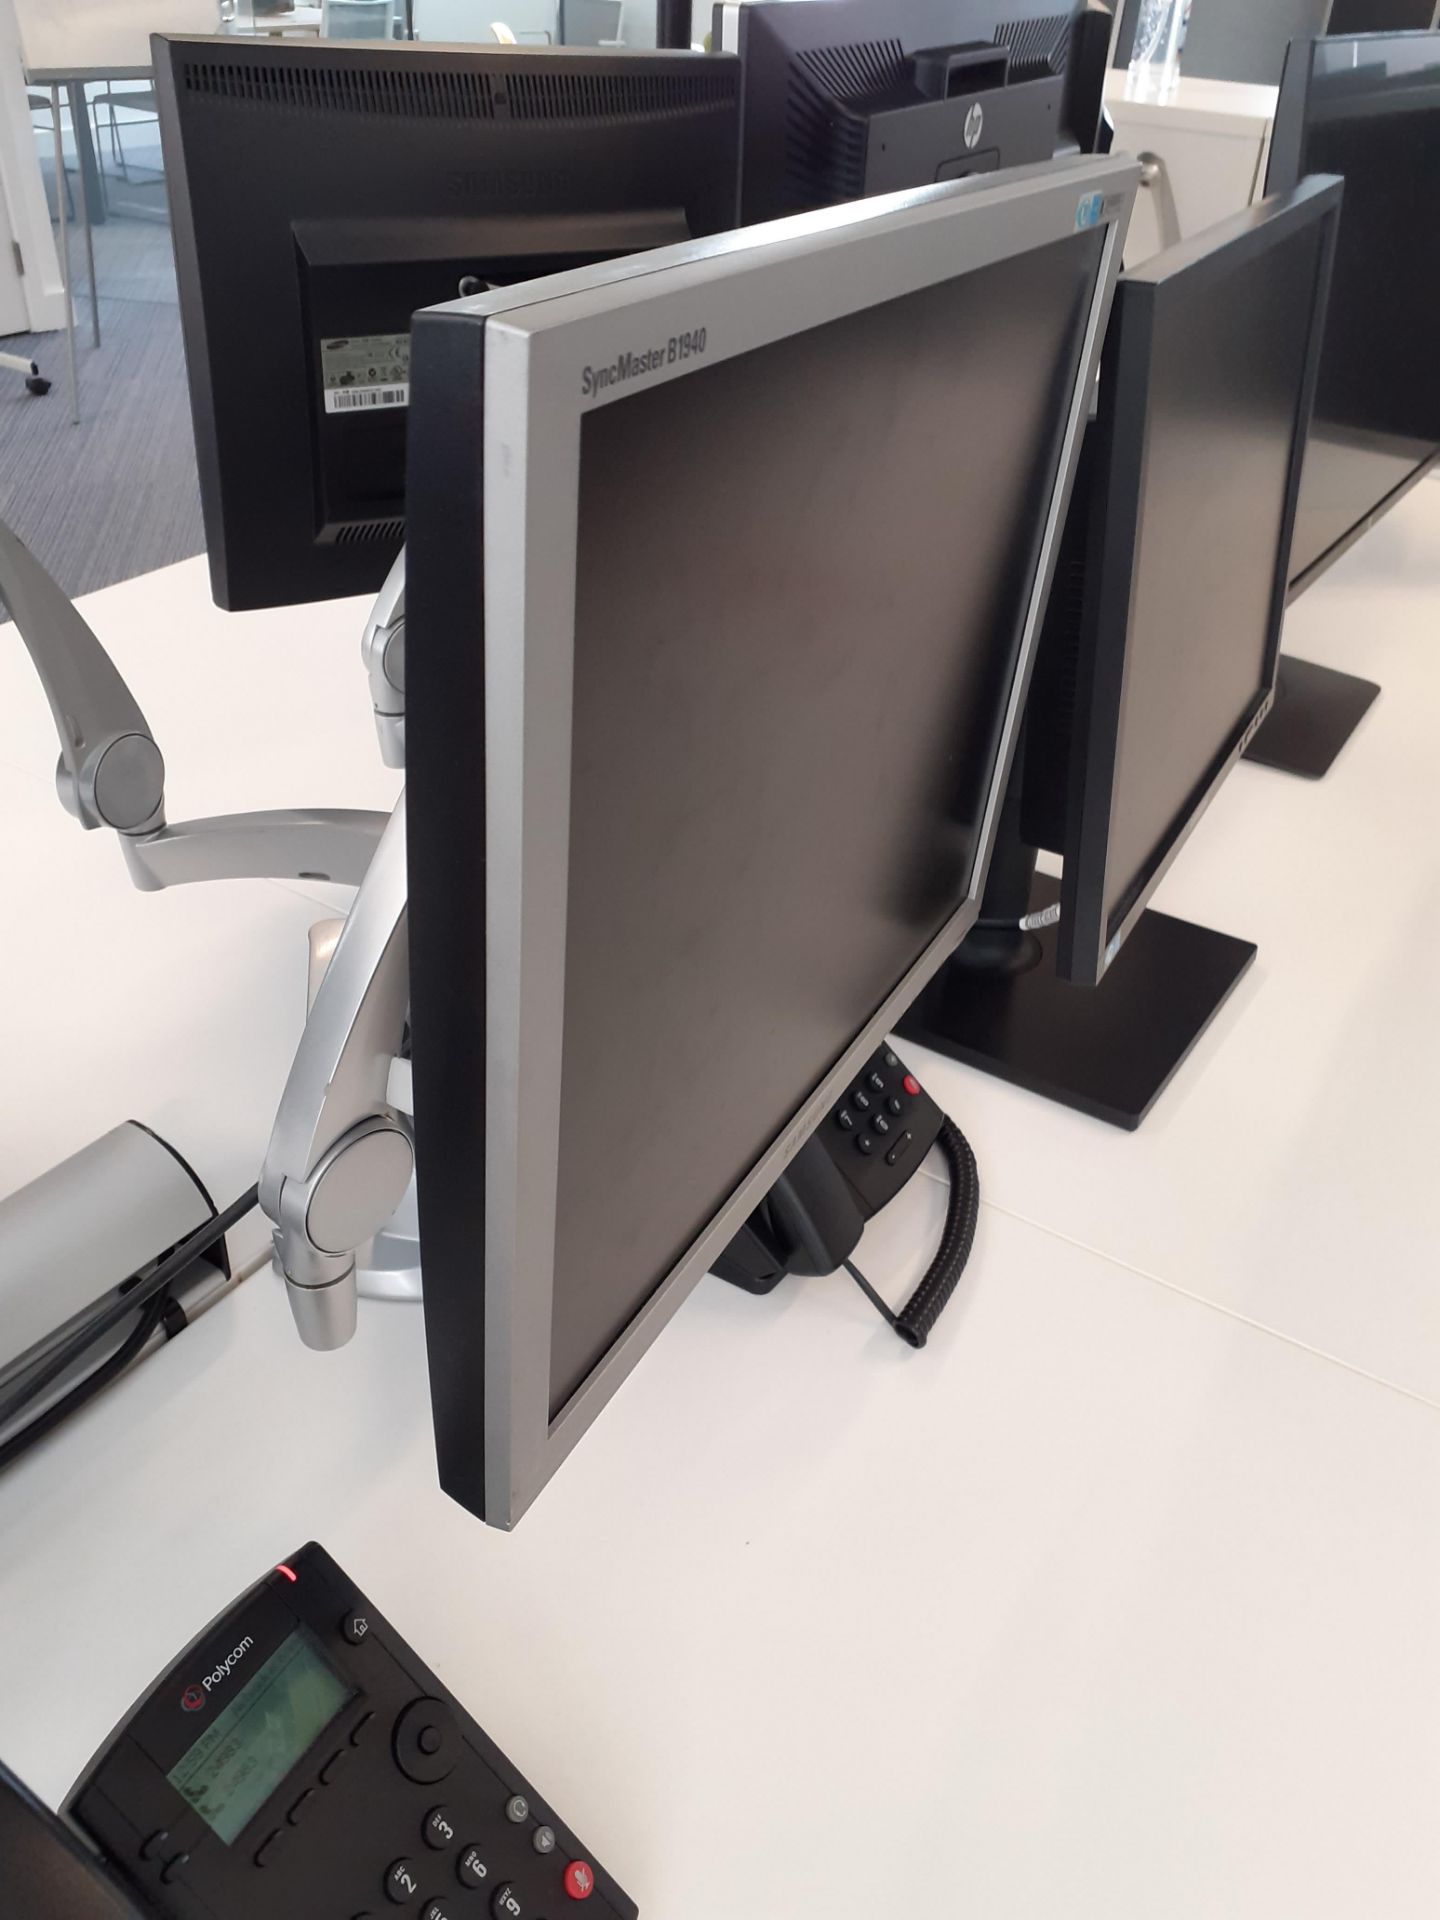 2 Ergotron Neo-Flex Desk Mount Monitor Brackets with 2 x Samsung Syncmaster B1940 Computer - Image 2 of 4